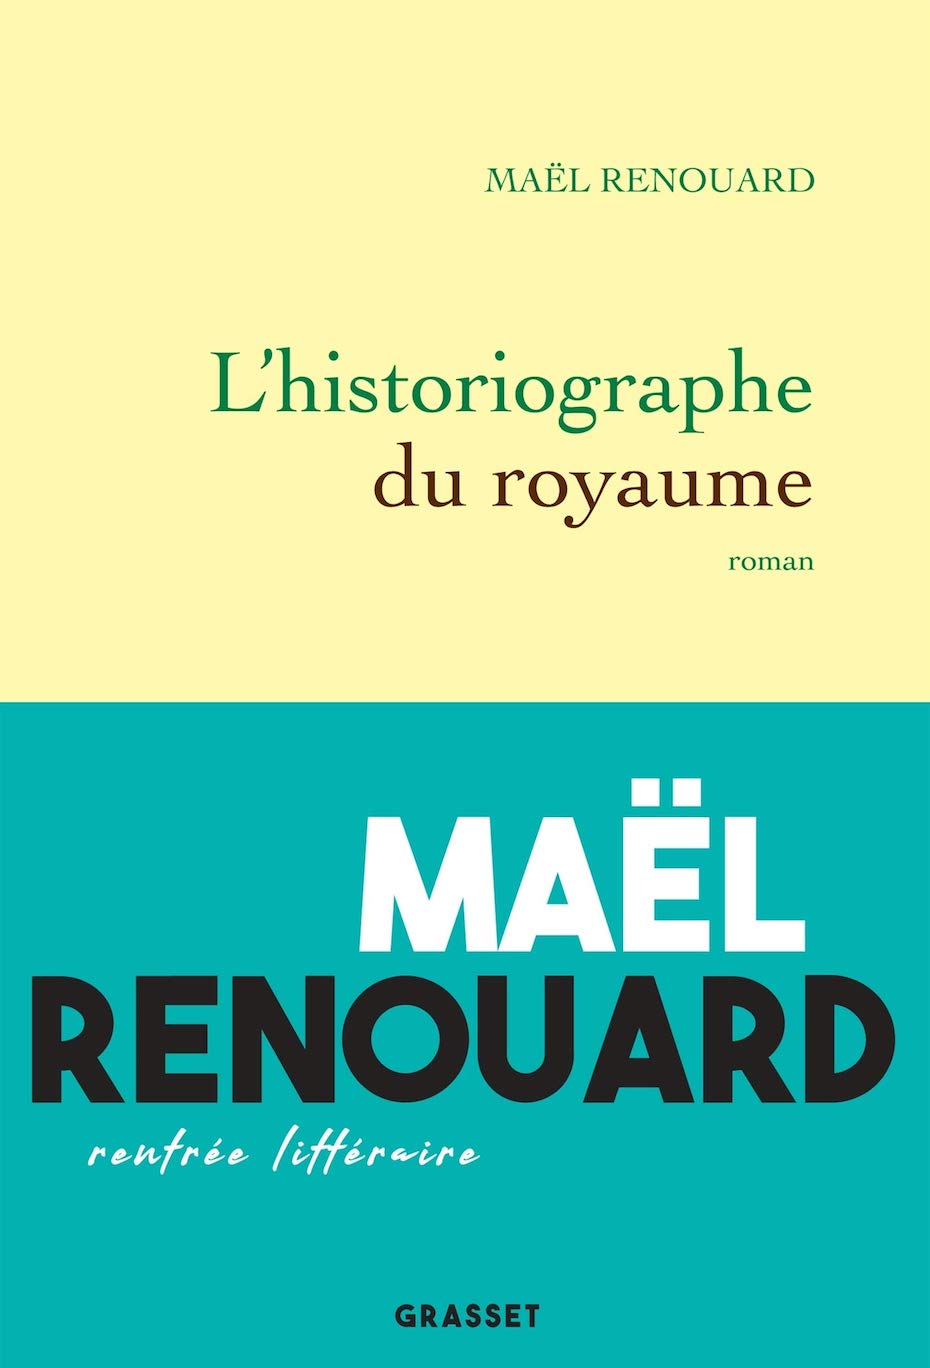 Maël Renouard, L'historiographe du Royaume (Grasset)